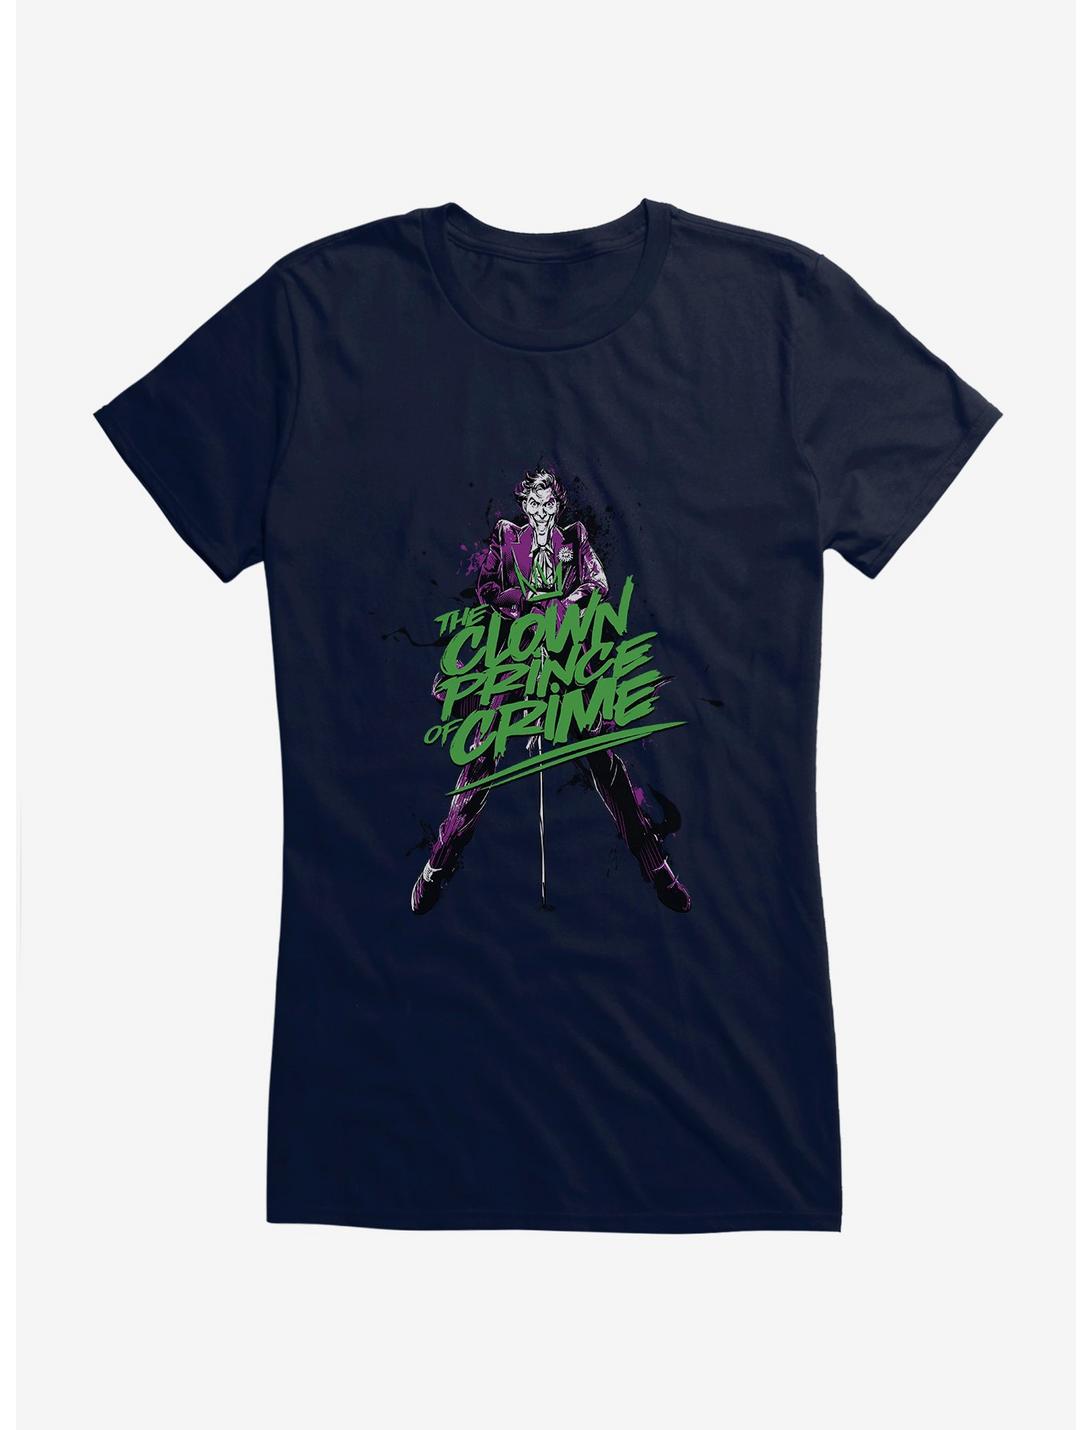 DC Comics Batman The Joker The Clown Prince Girls T-Shirt | Hot Topic